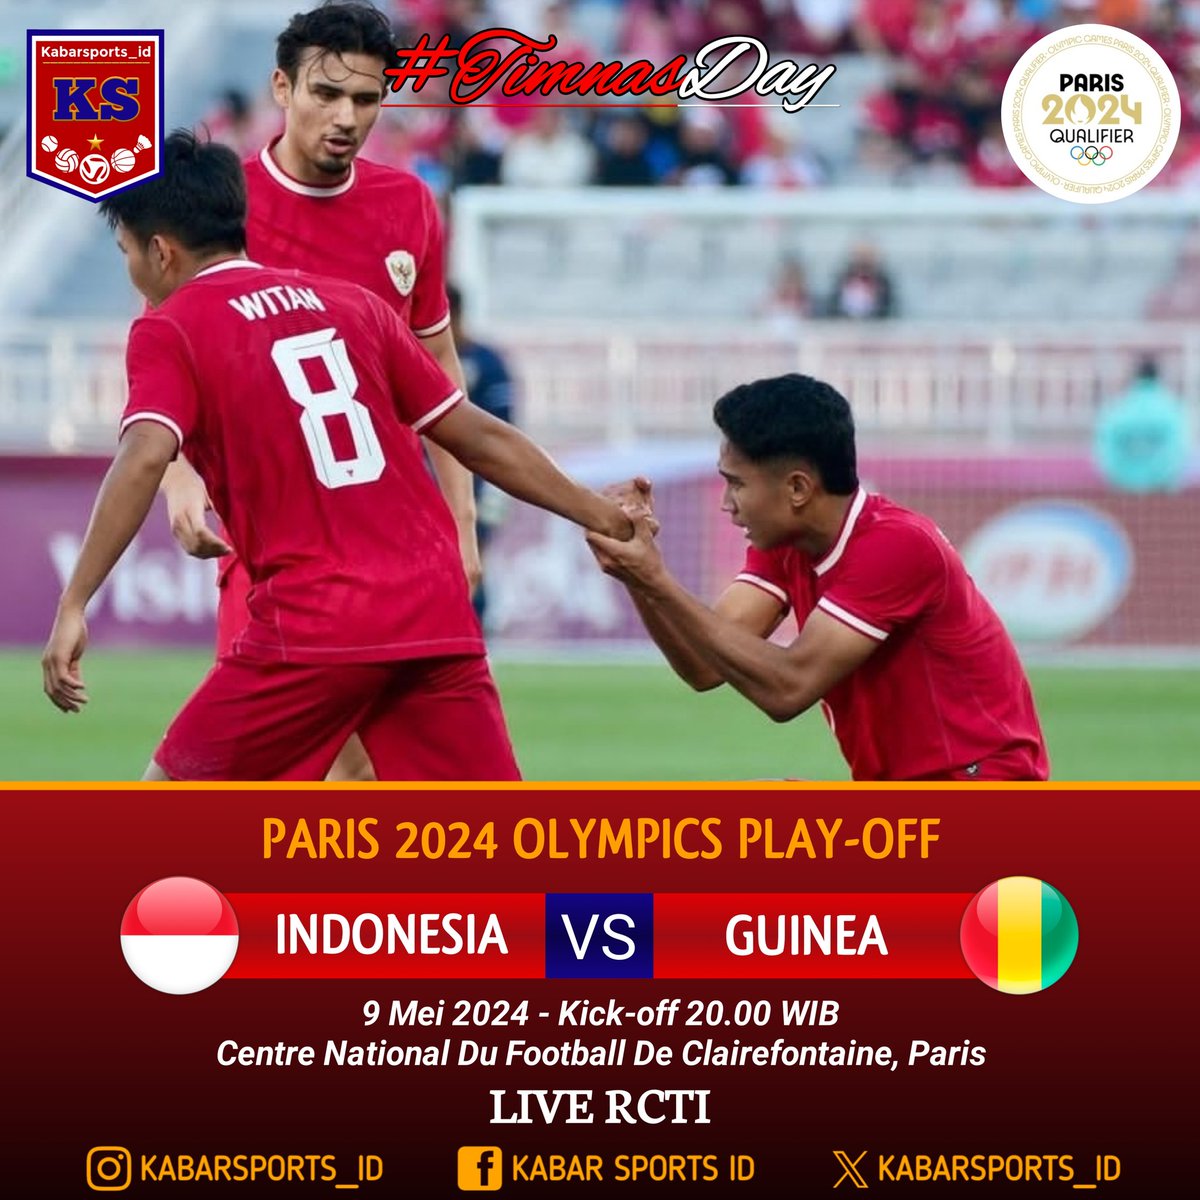 #TimnasDay 🇮🇩⚽
Paris 2024 Olympics Play-off

Indonesia 🇮🇩 vs 🇬🇳 Guinea
• Kick-off 20.00 WIB
• Live RCTI

Good Luck 🇮🇩❤🦅

#Playoff #RoadToOlympic #OlympicQualifiers #TimnasIndonesia #TimnasU23 #KitaGaruda #SepakbolaIndonesia #OlahragaIndonesia